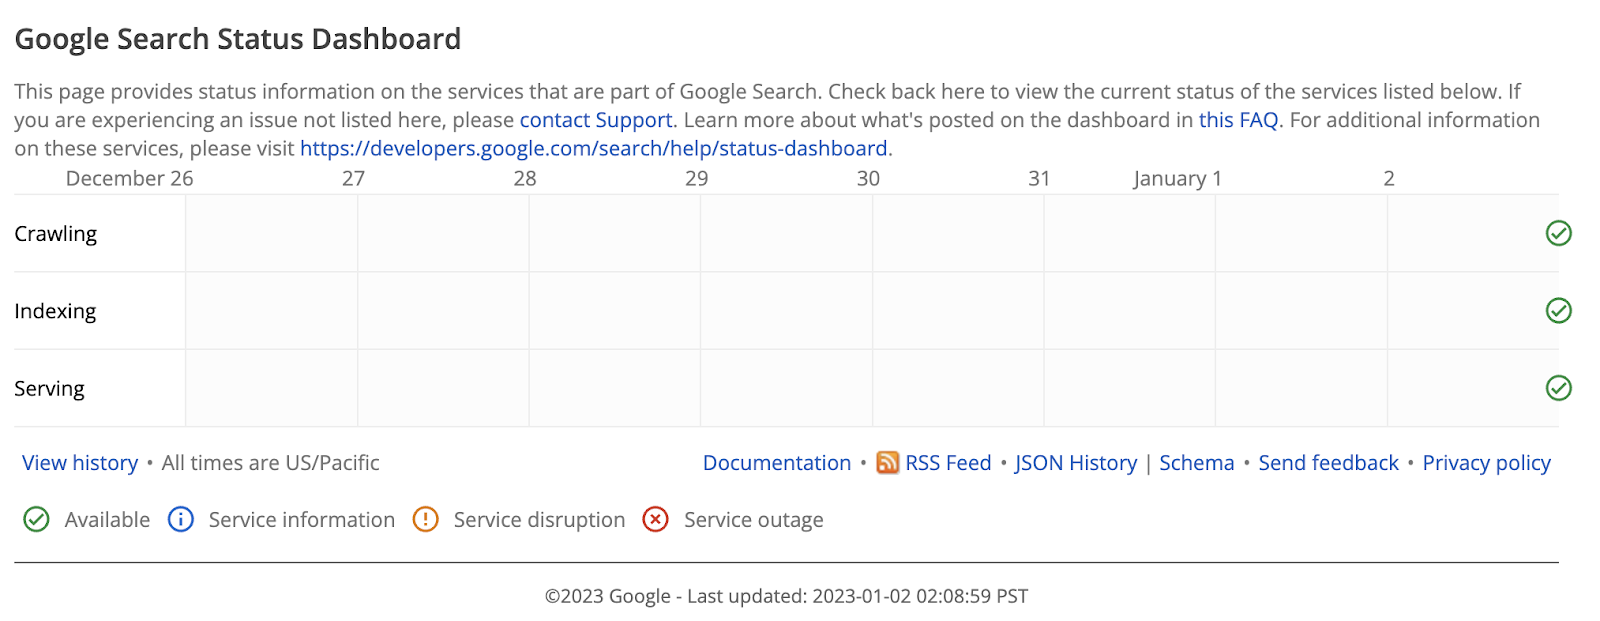 Google search status dashboard med en tabell